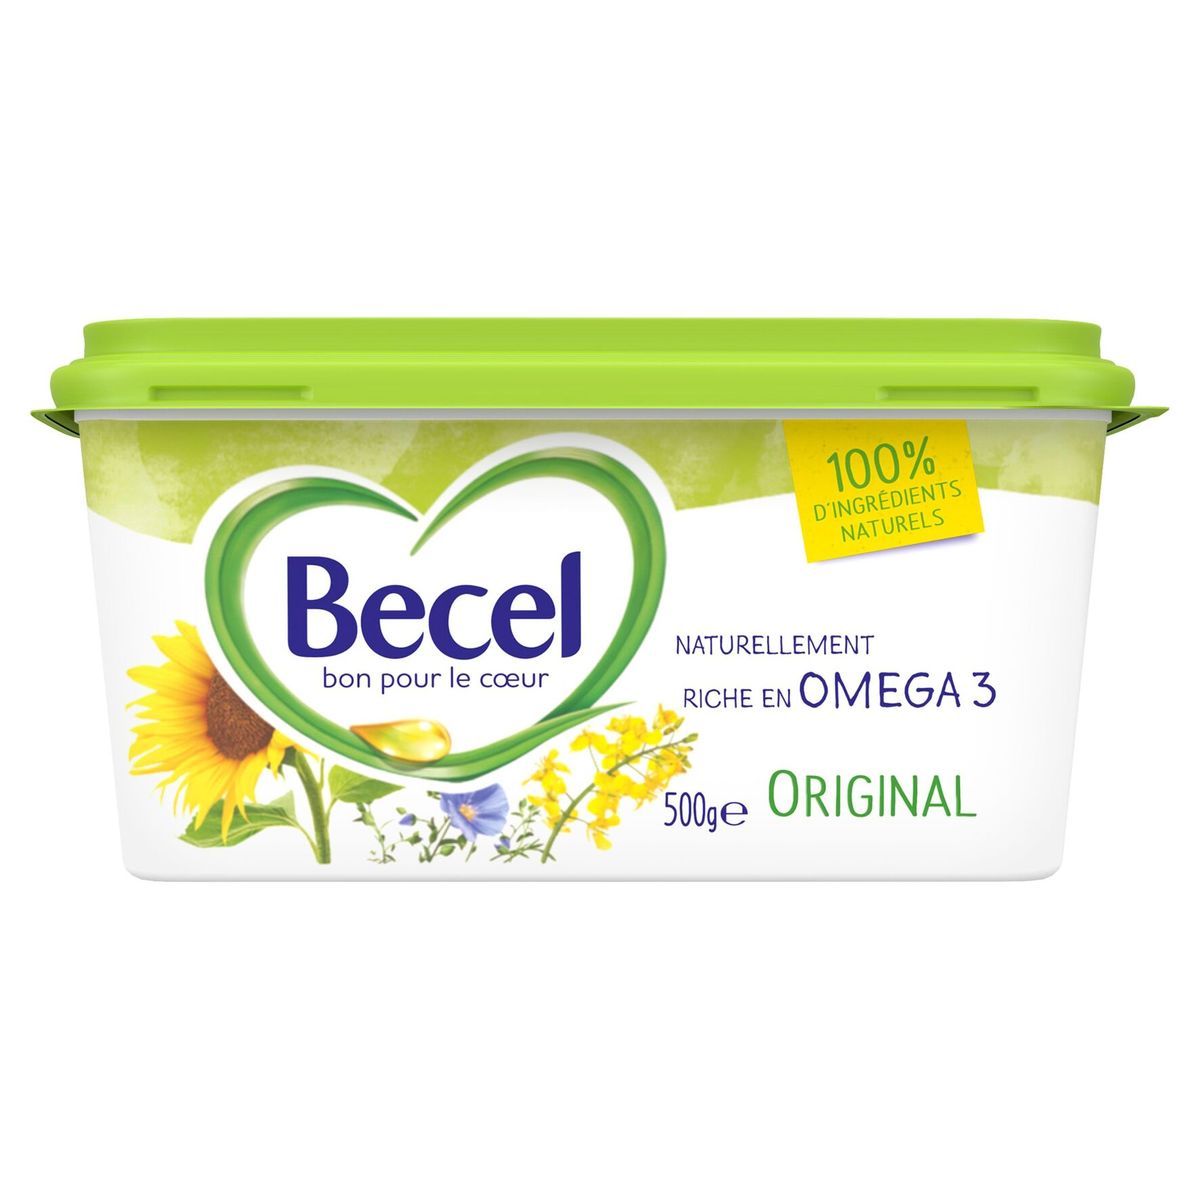 Becel Original 500 g